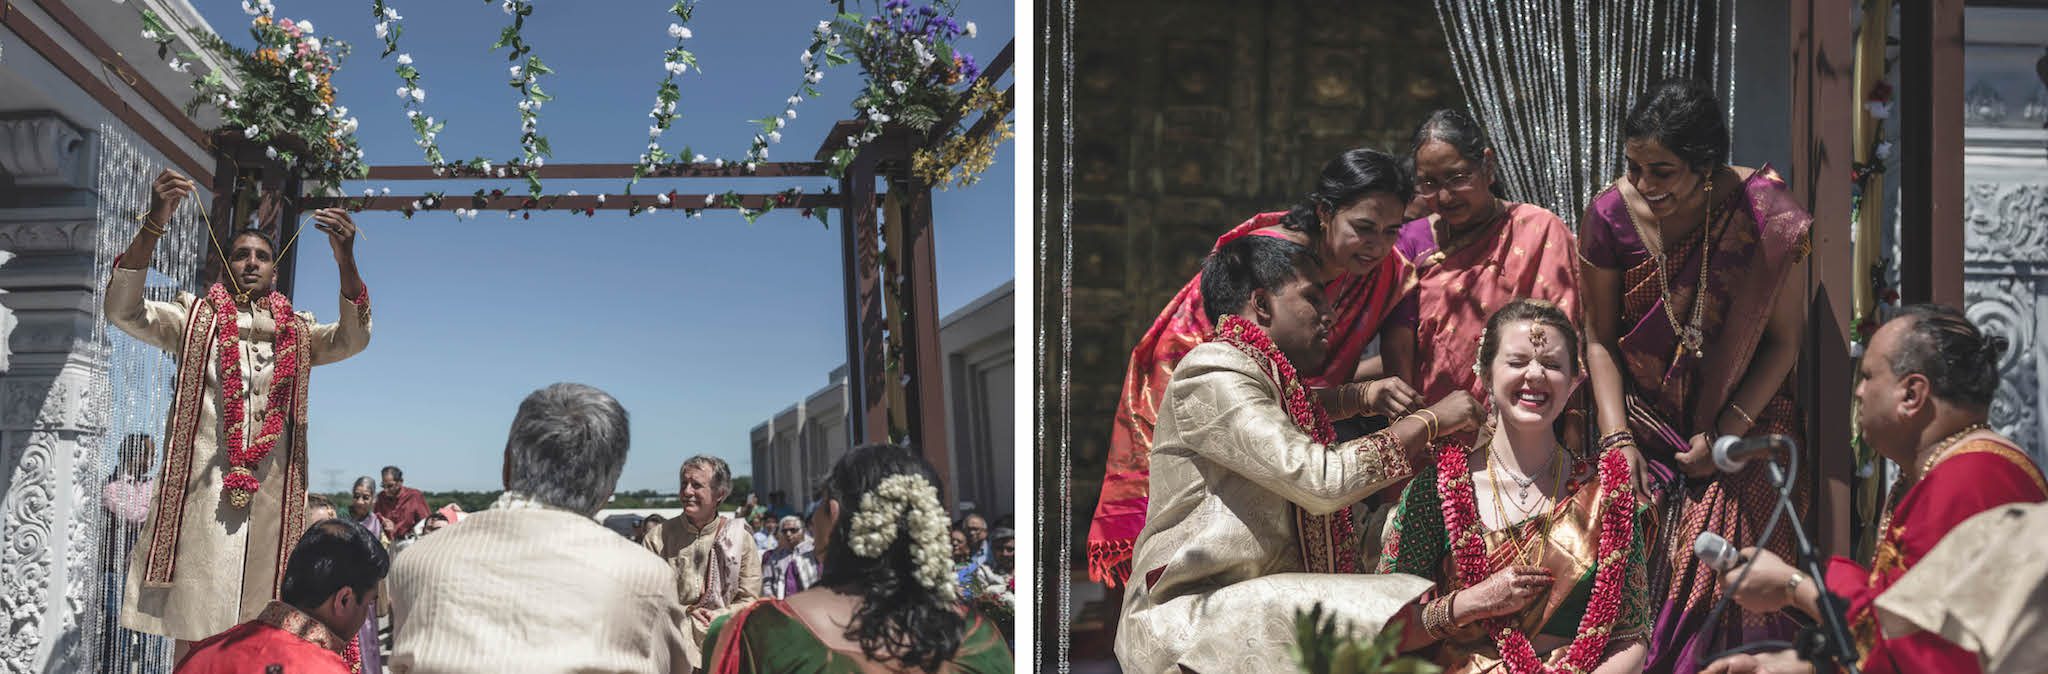 aria minneapolis indian wedding photographer-46.jpg